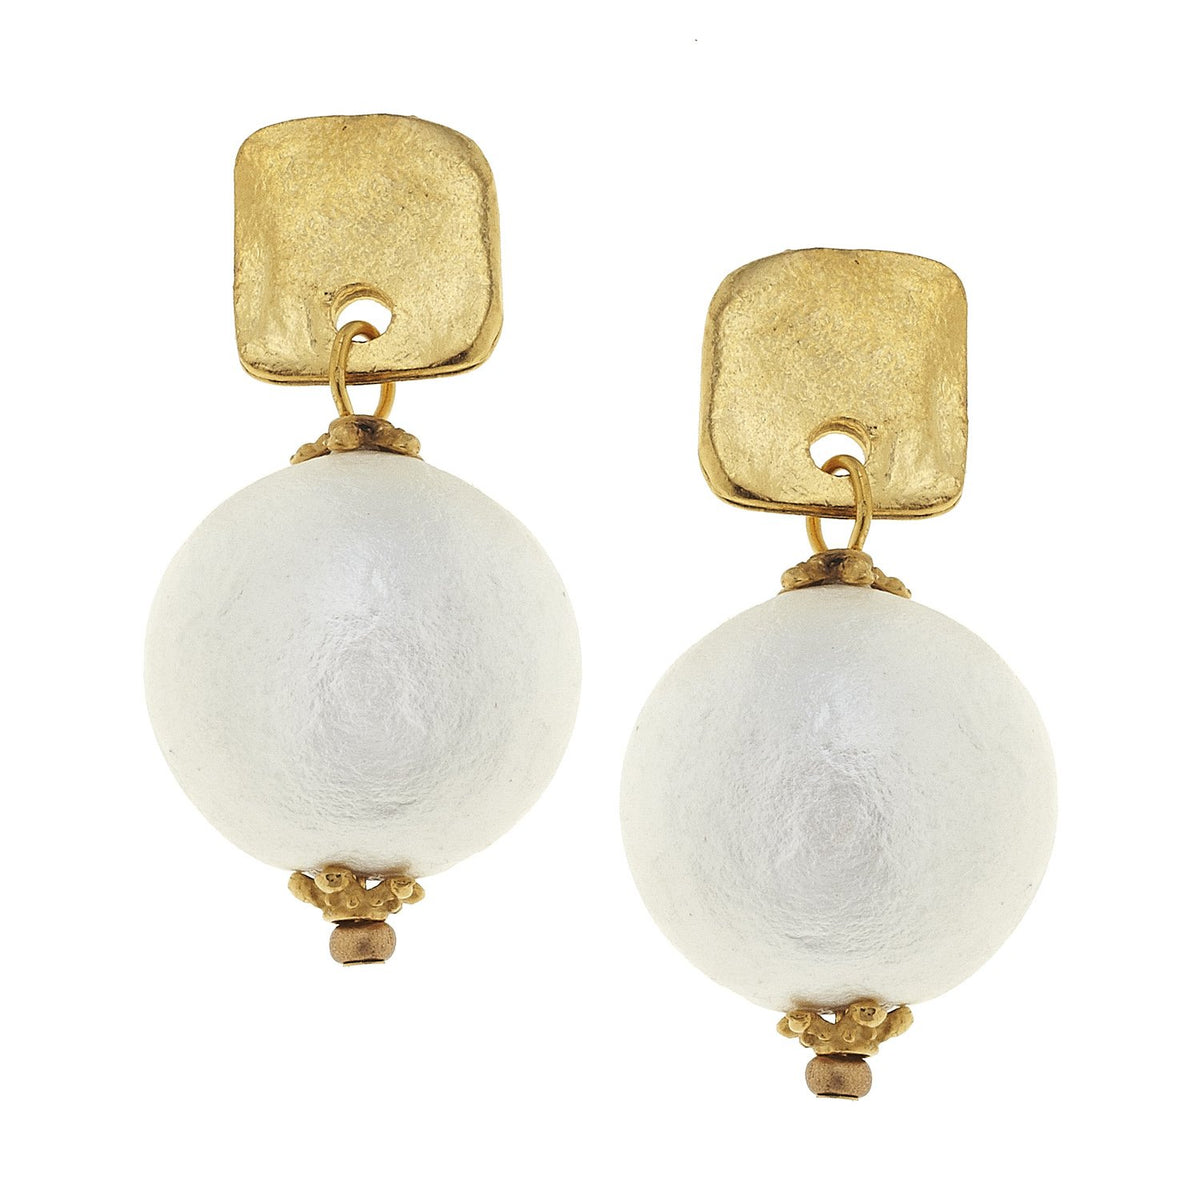 24K Gold Plated Simple Pearl Dangle Earrings, White Pearl Earrings, Pearl Wedding Earrings